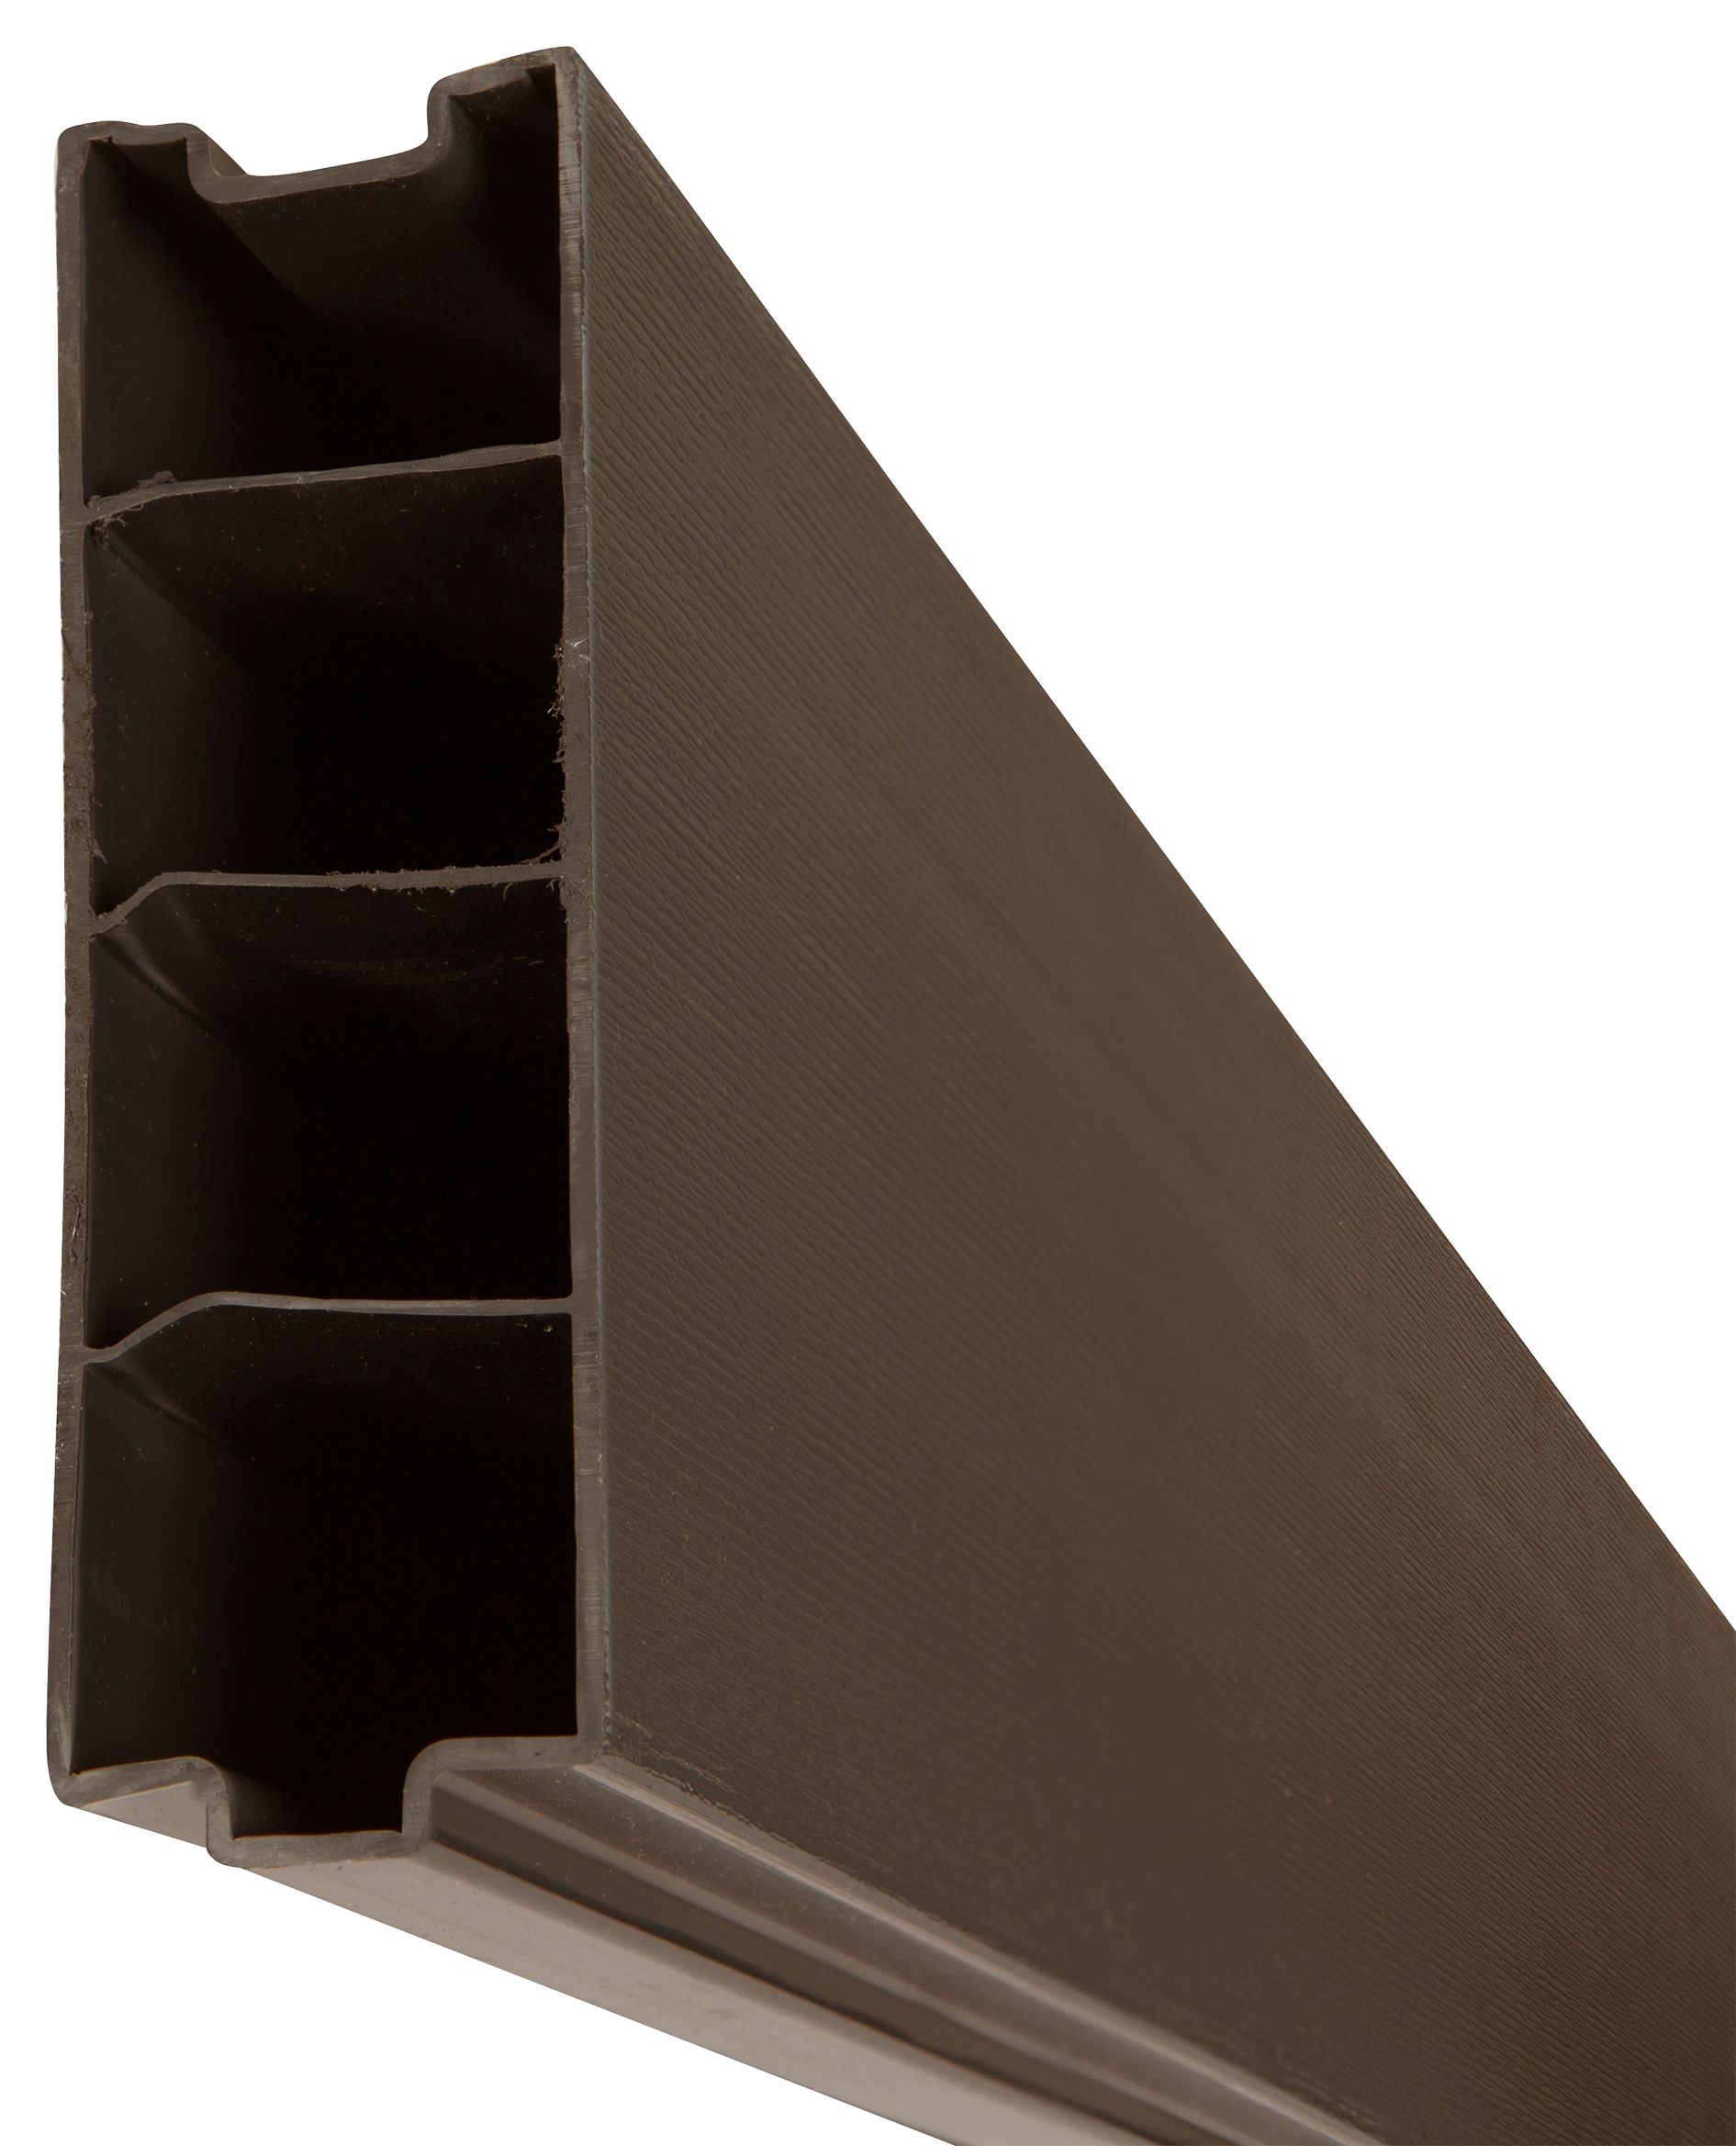 Image of DuraPost Composite Gravel Board Sepia Brown - 50mm x 150mm x 1.83m